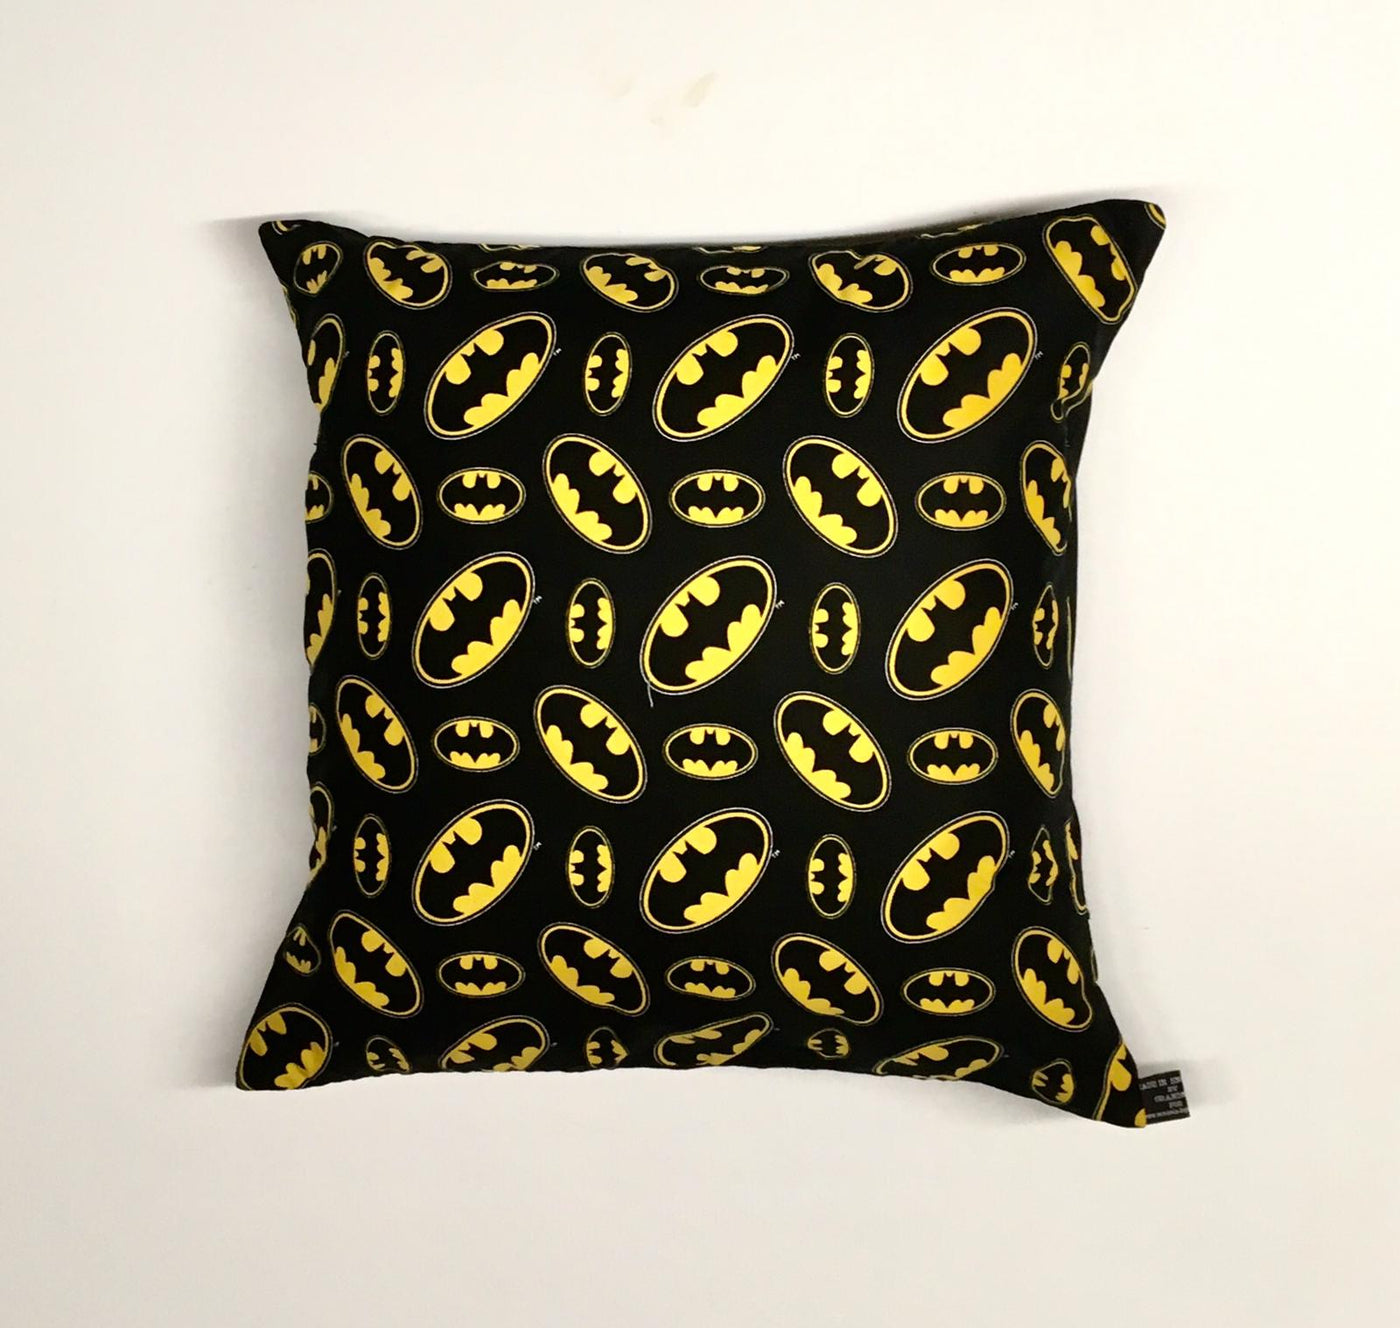 Superhero Cushion Cover Fits 18" x 18" Scatter Cushion